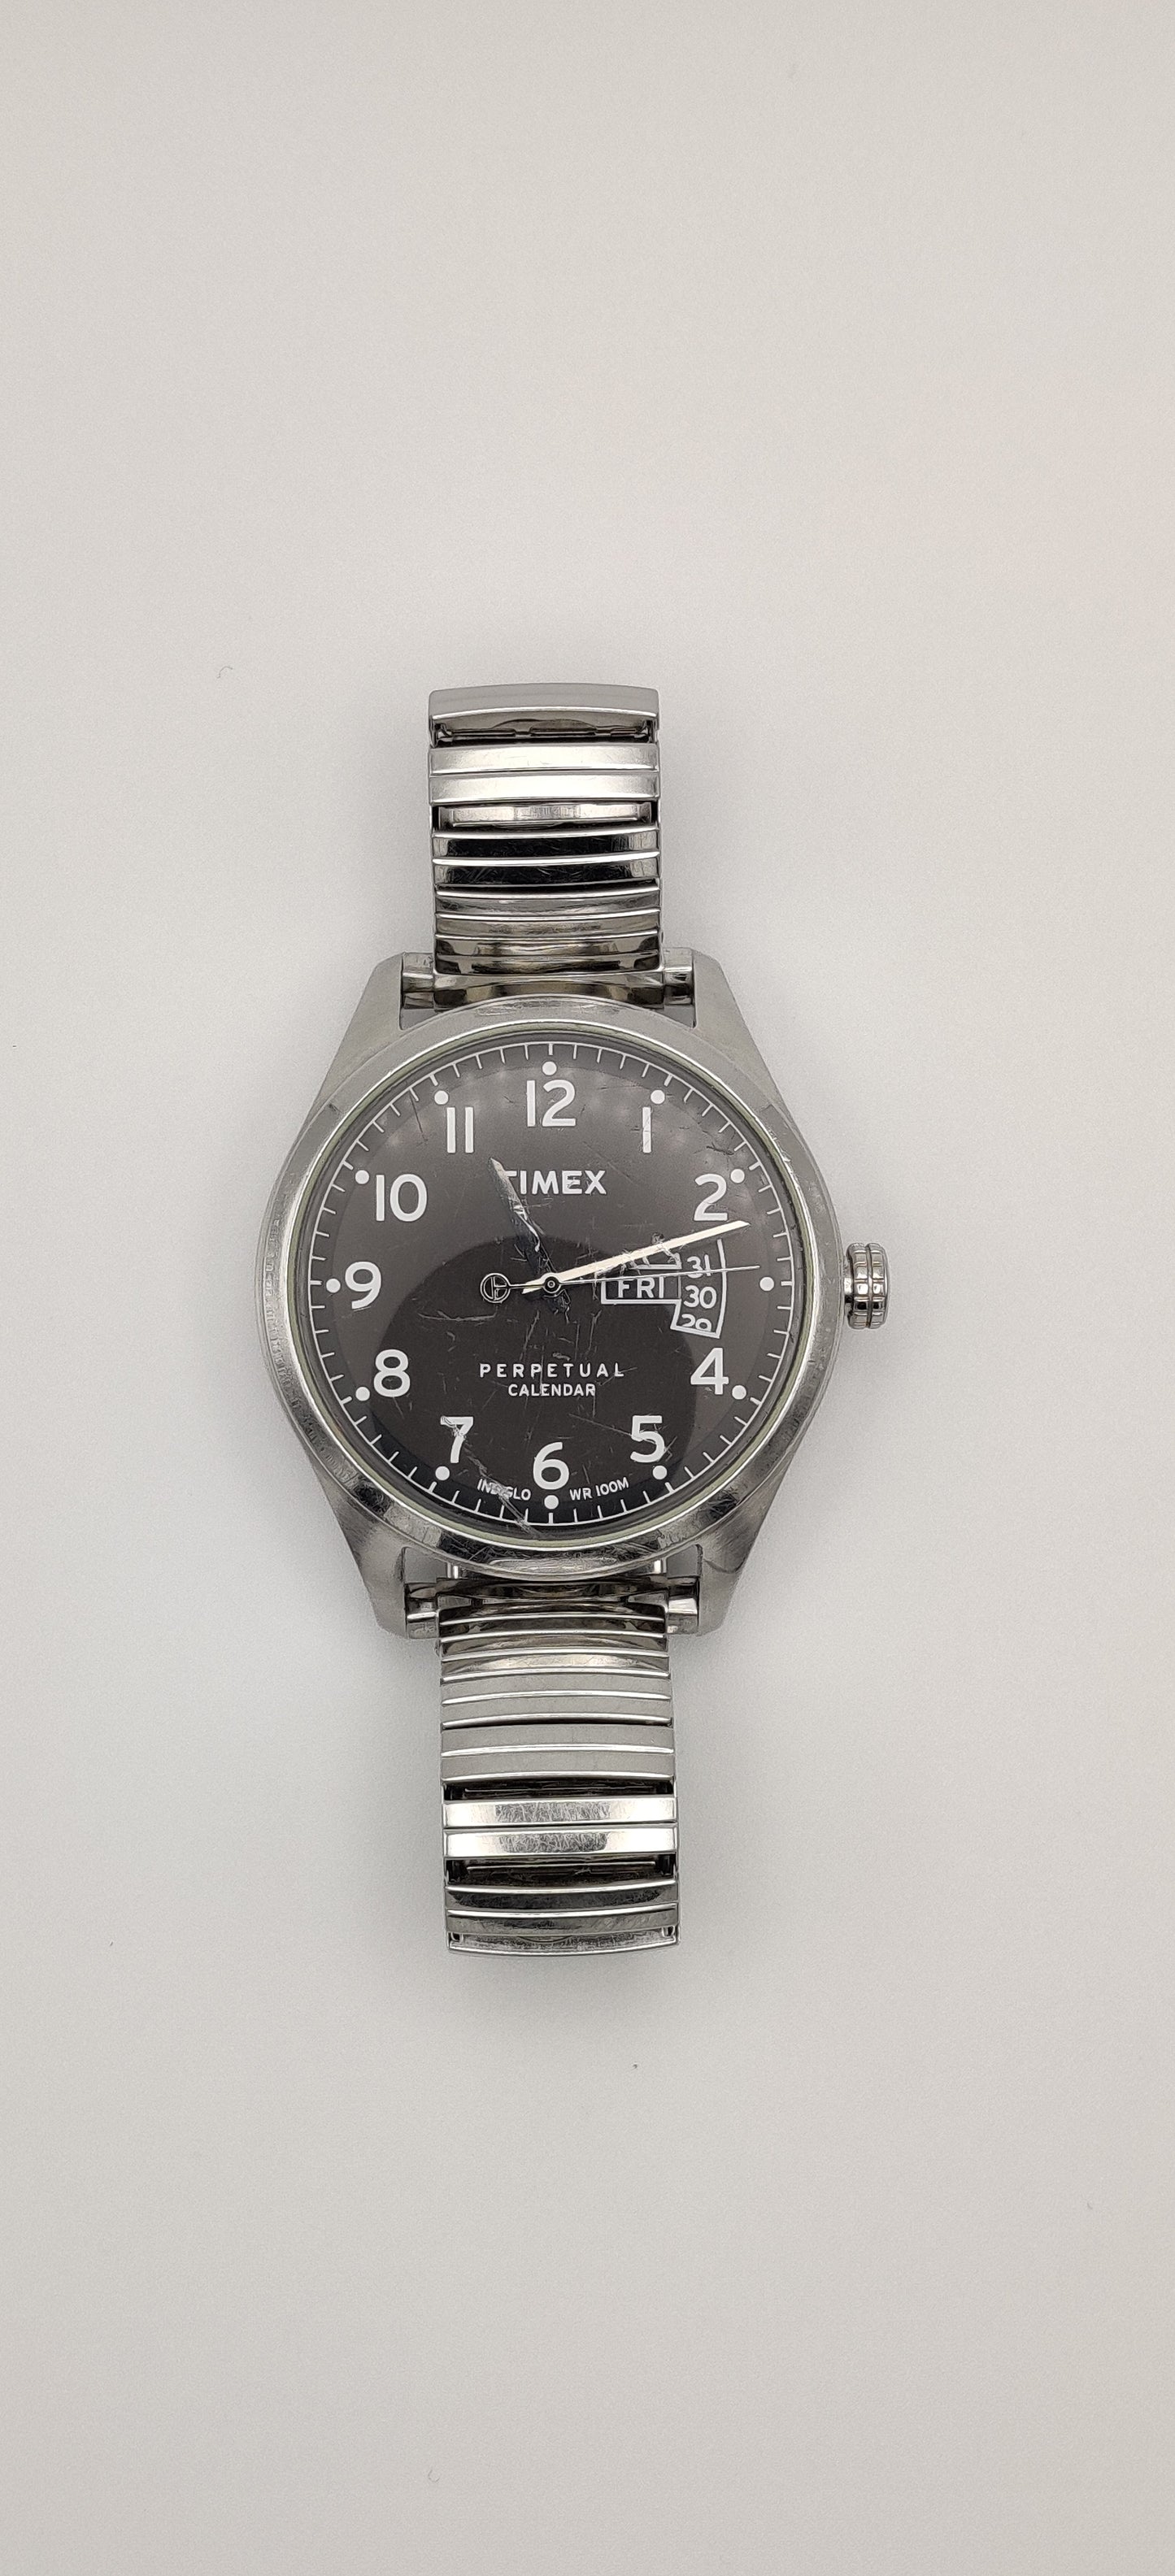 Timex Perpetual Calendar Indiglo Men's Watch